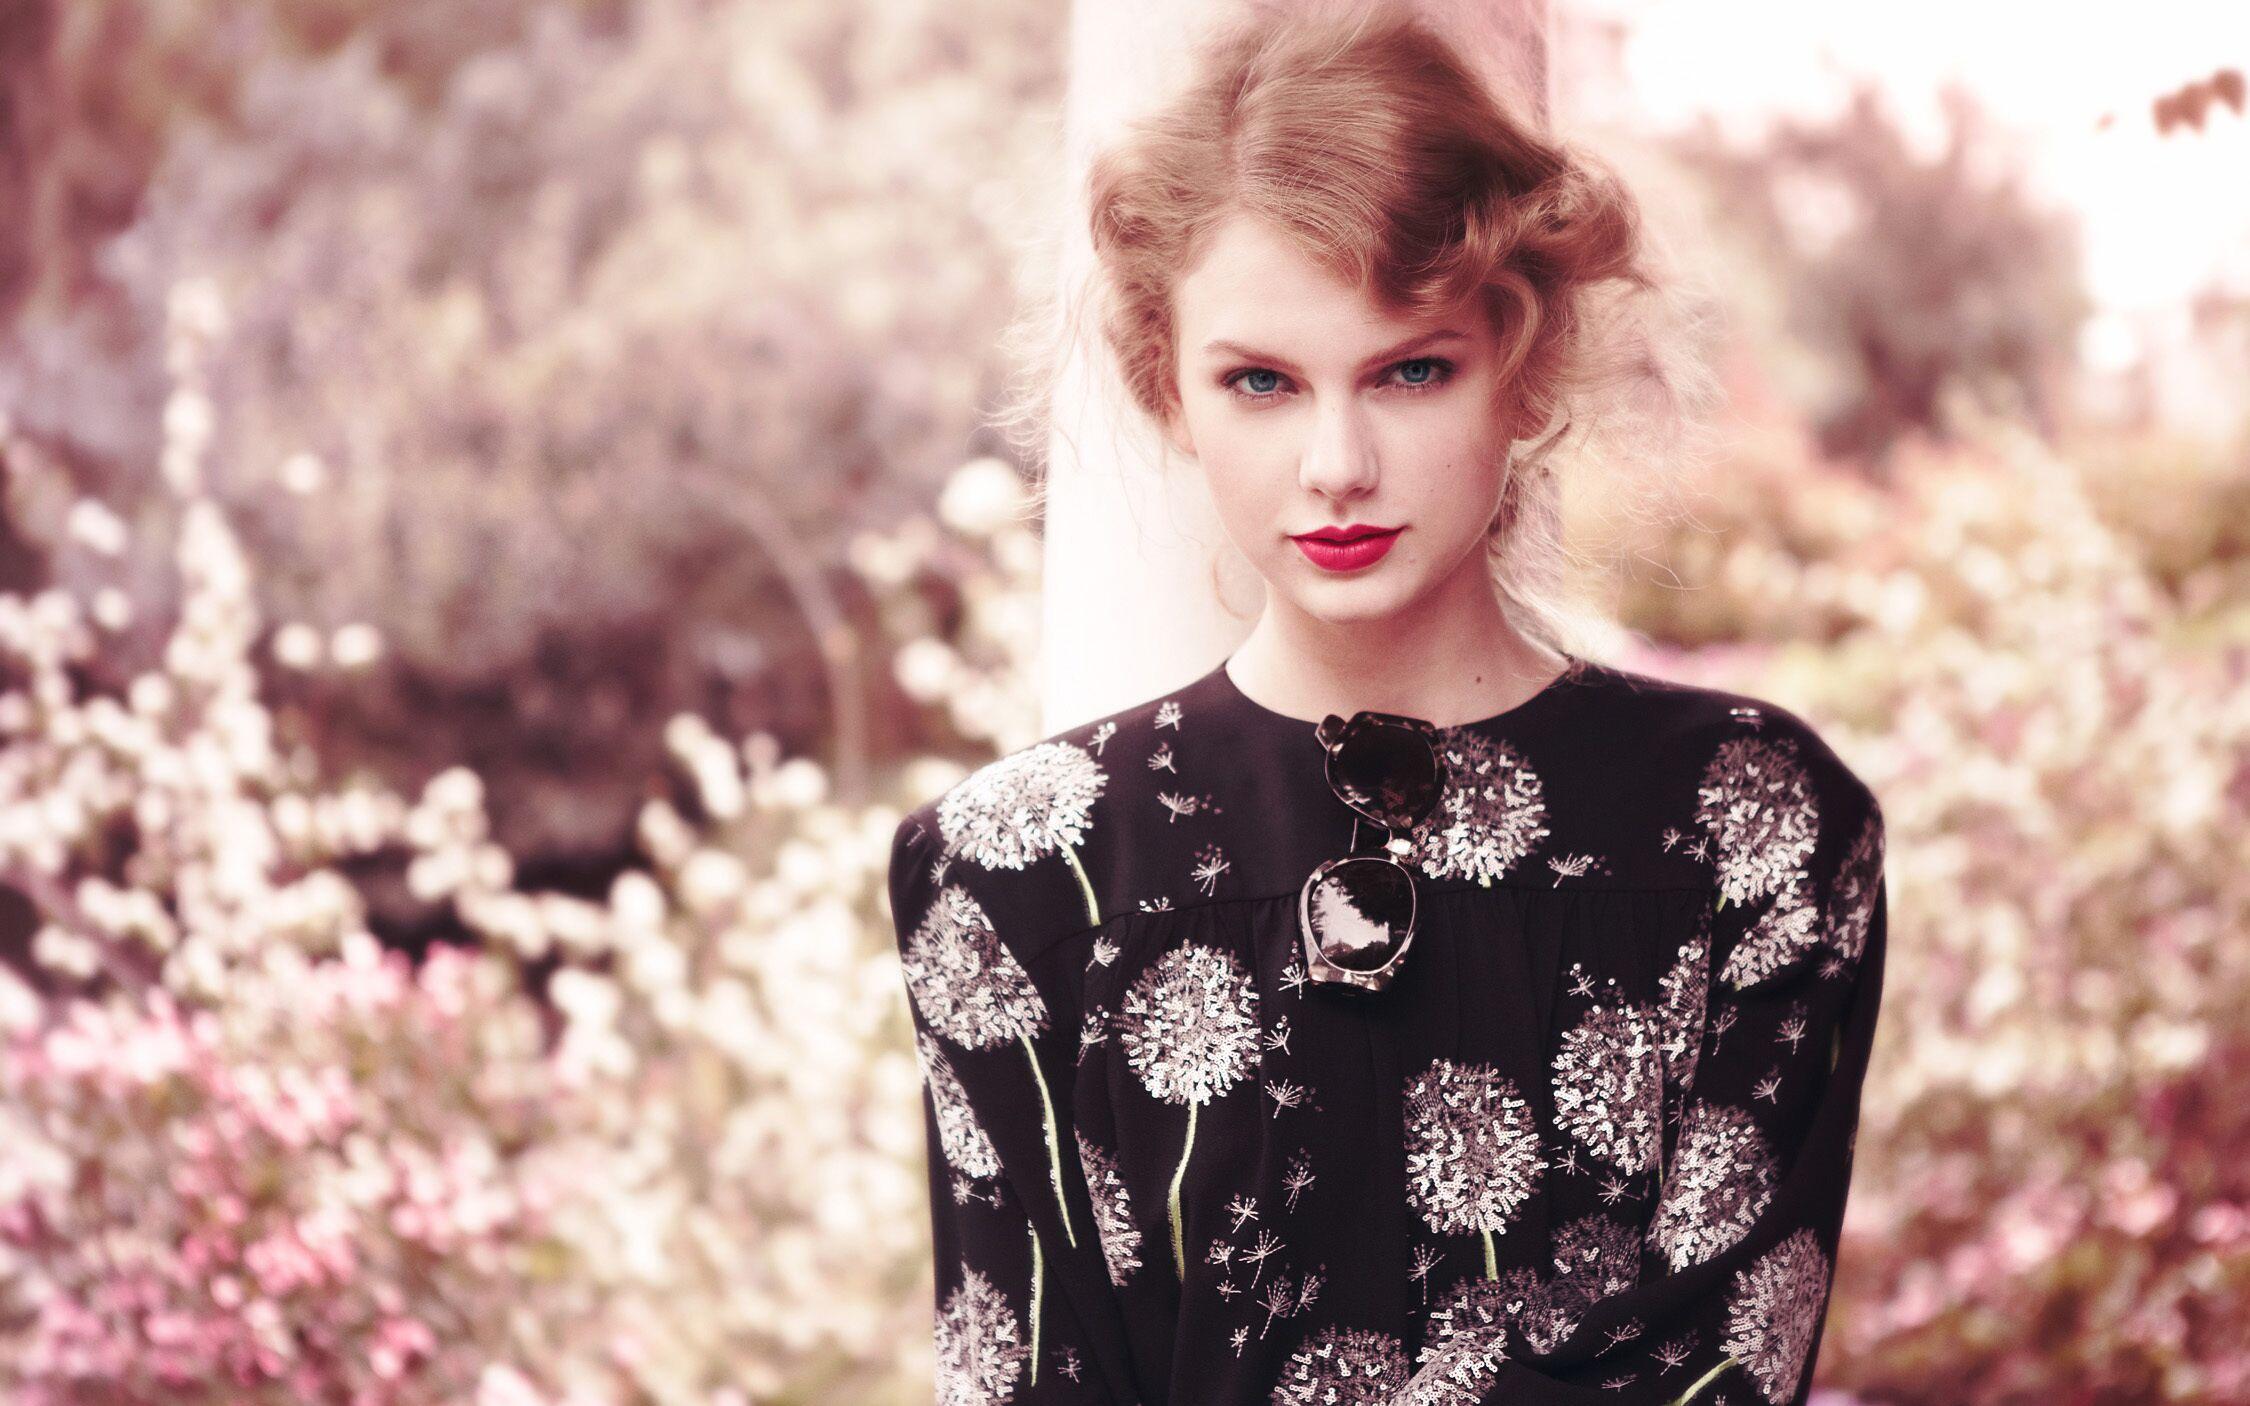 Taylor Swift Beautiful Wallpaper